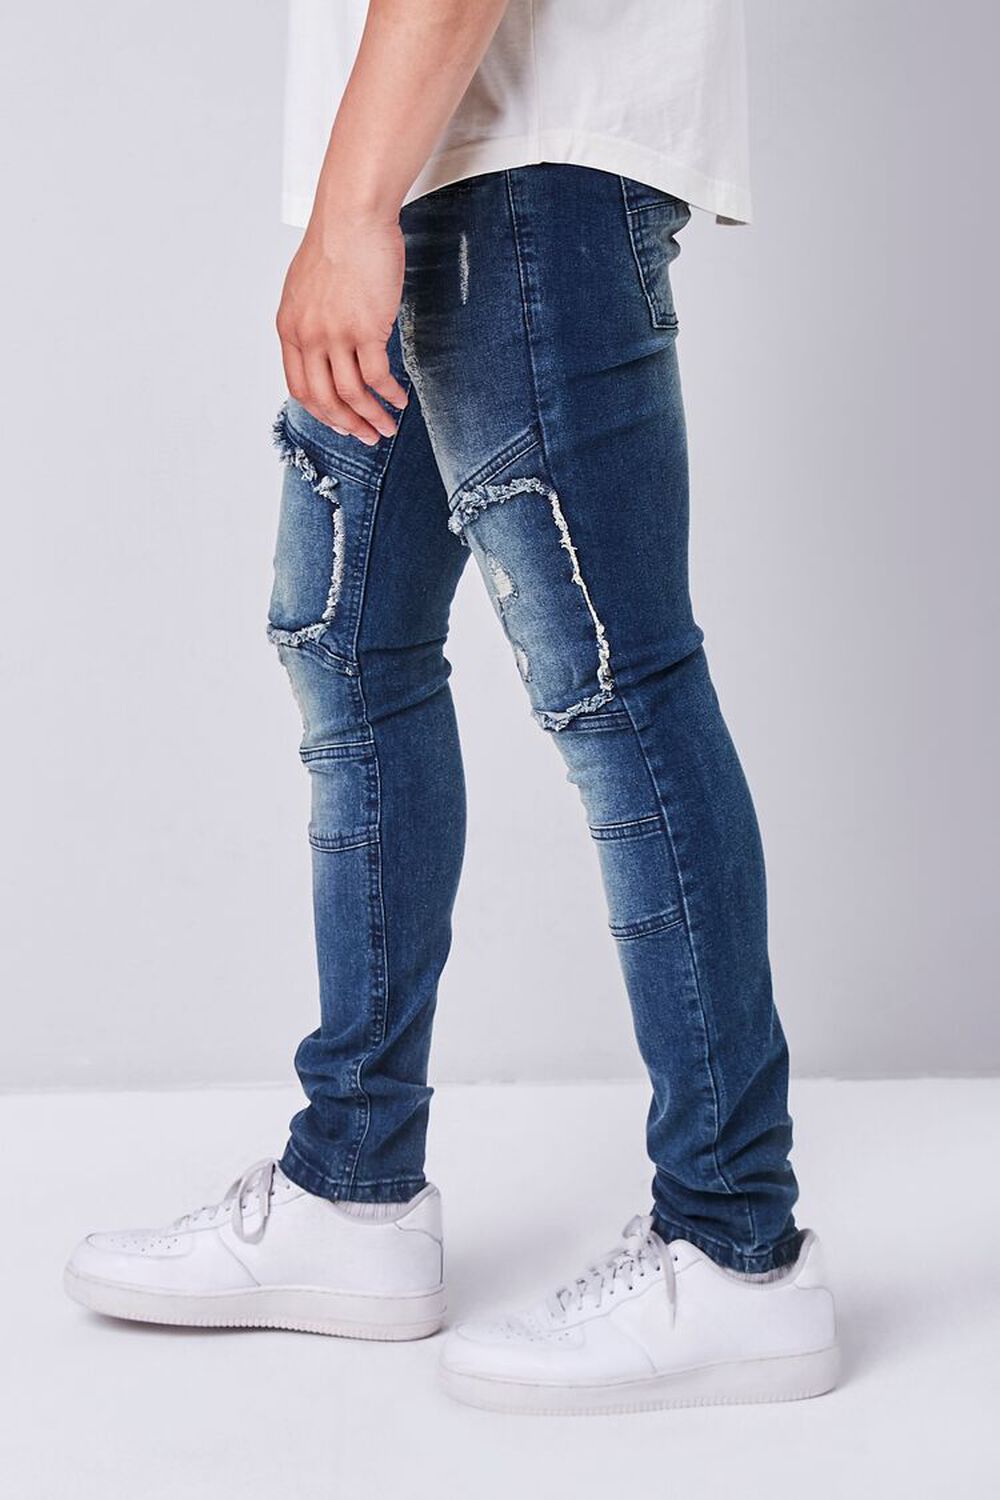 LIGHT DENIM Frayed Stonewash Slim-Fit Jeans, image 3